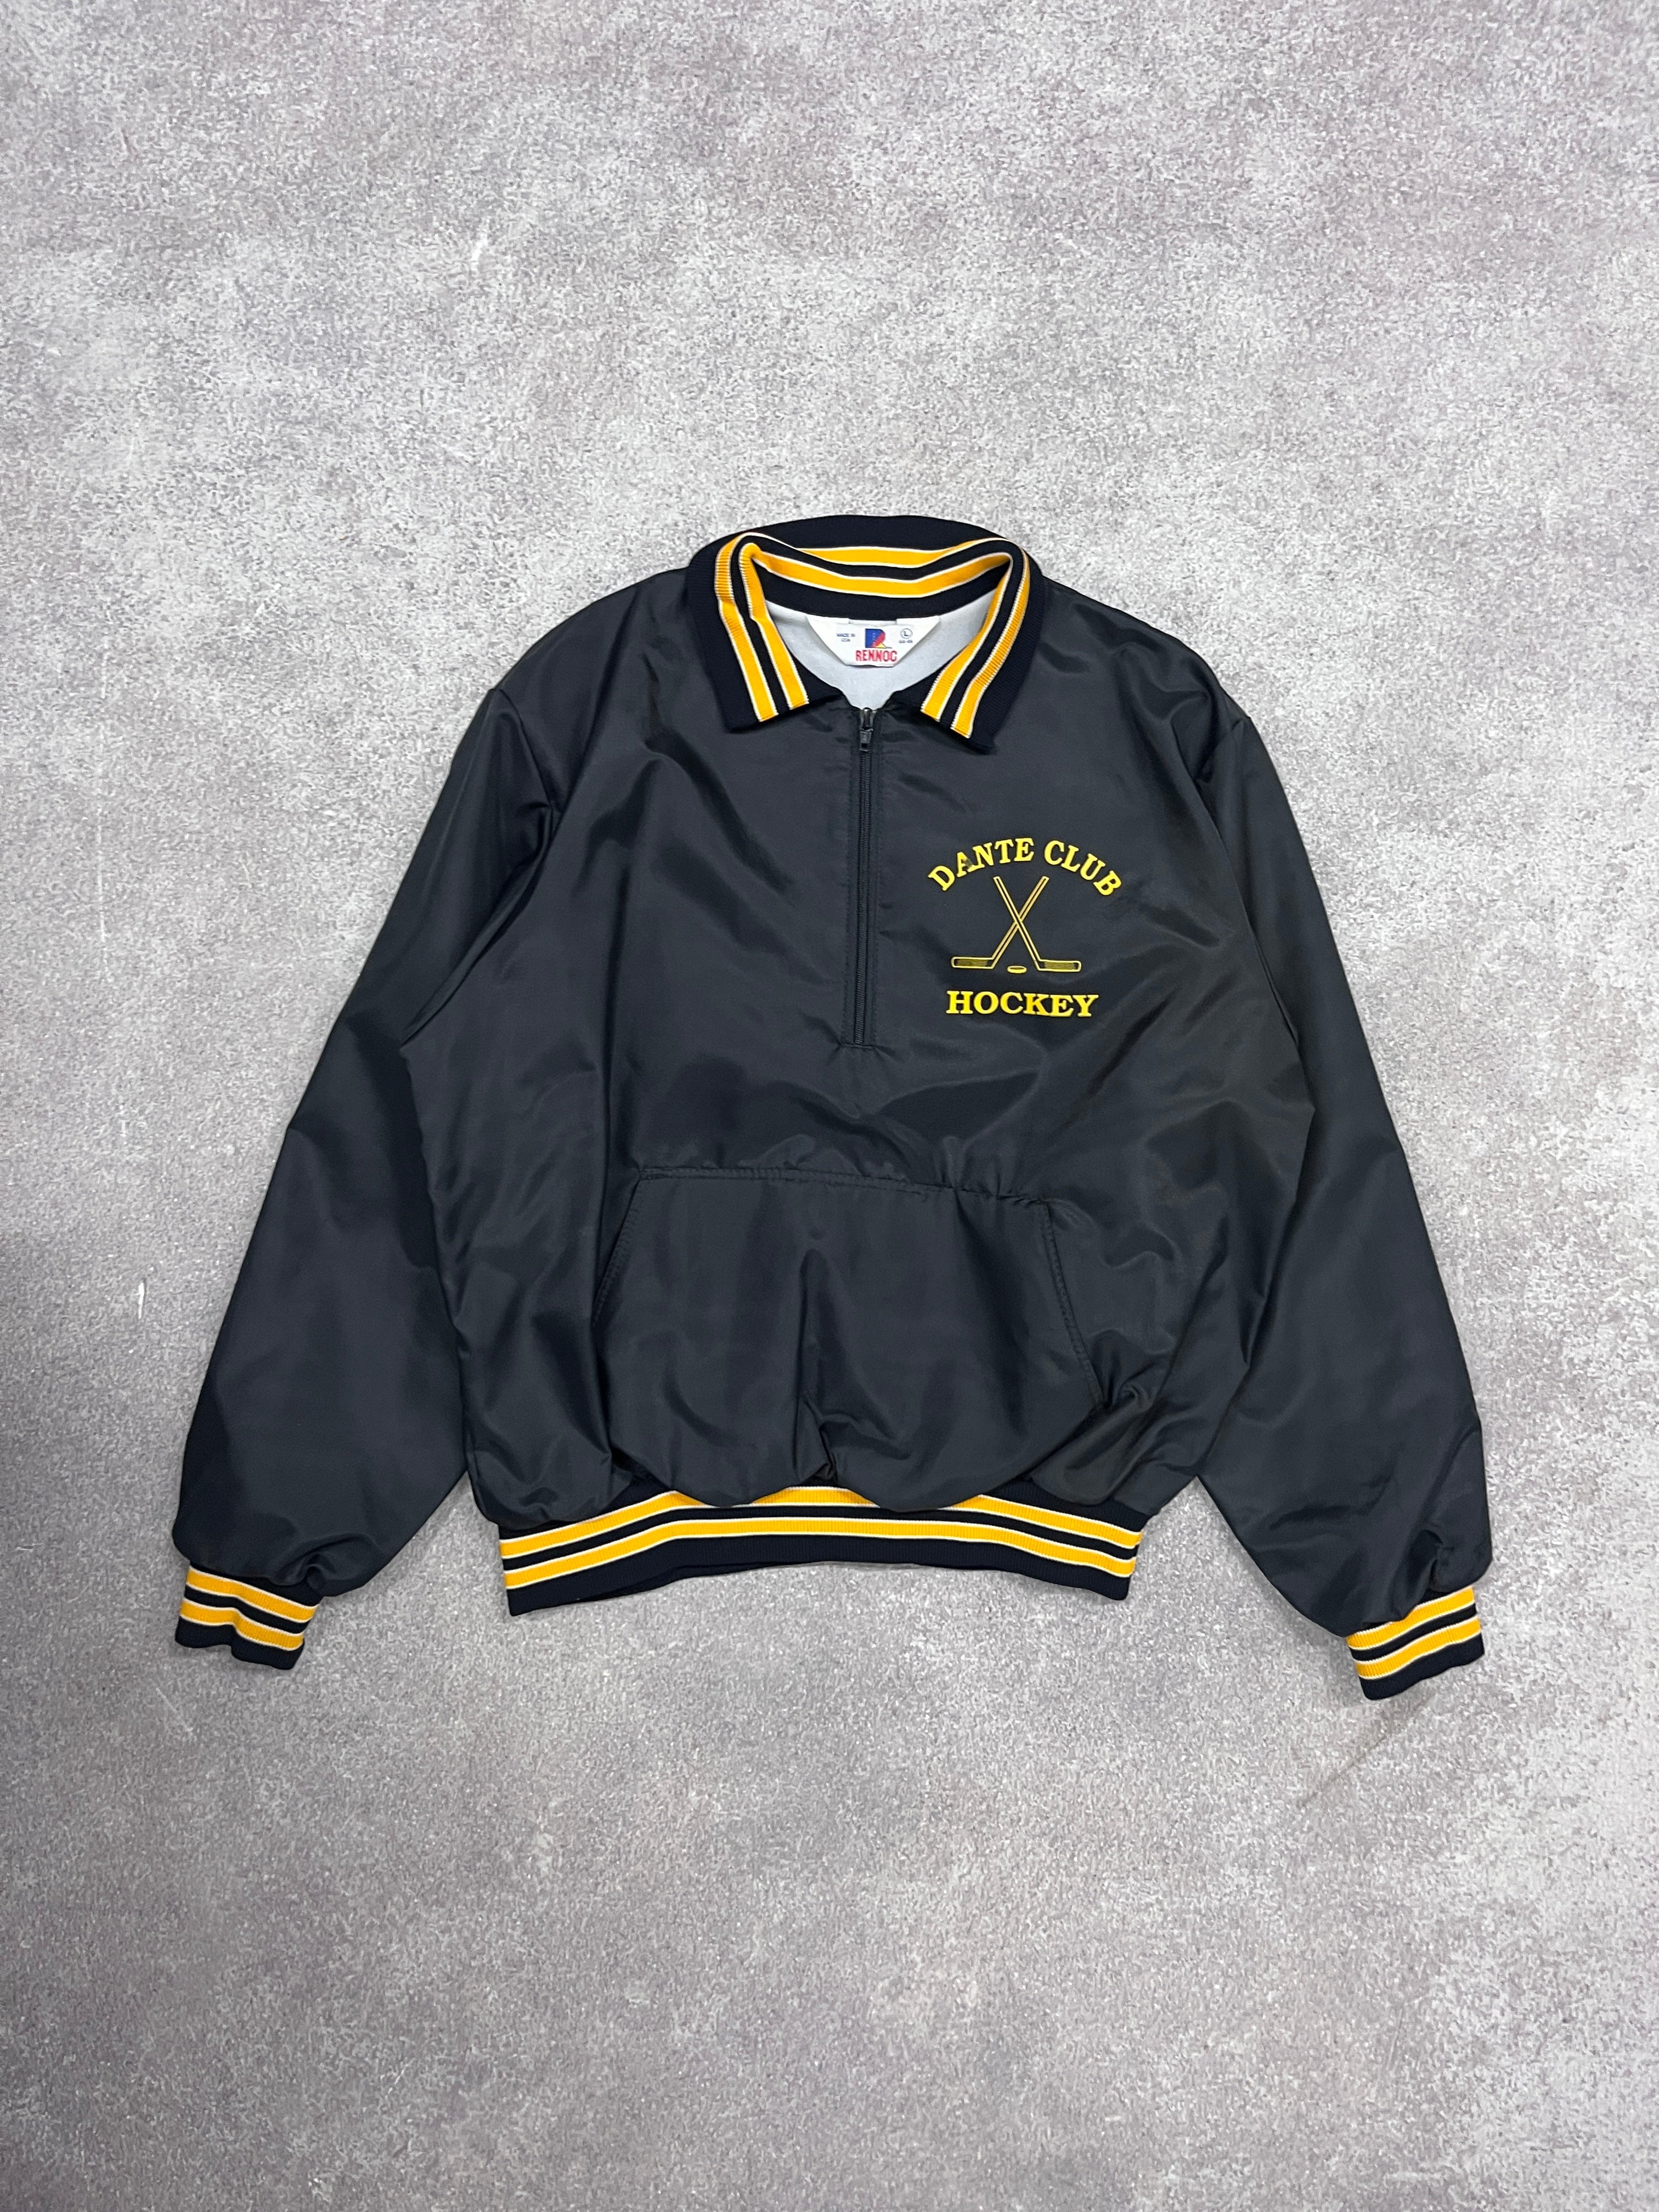 Vintage Dante Club Hockey Varsity Jacket Black // Medium - RHAGHOUSE VINTAGE